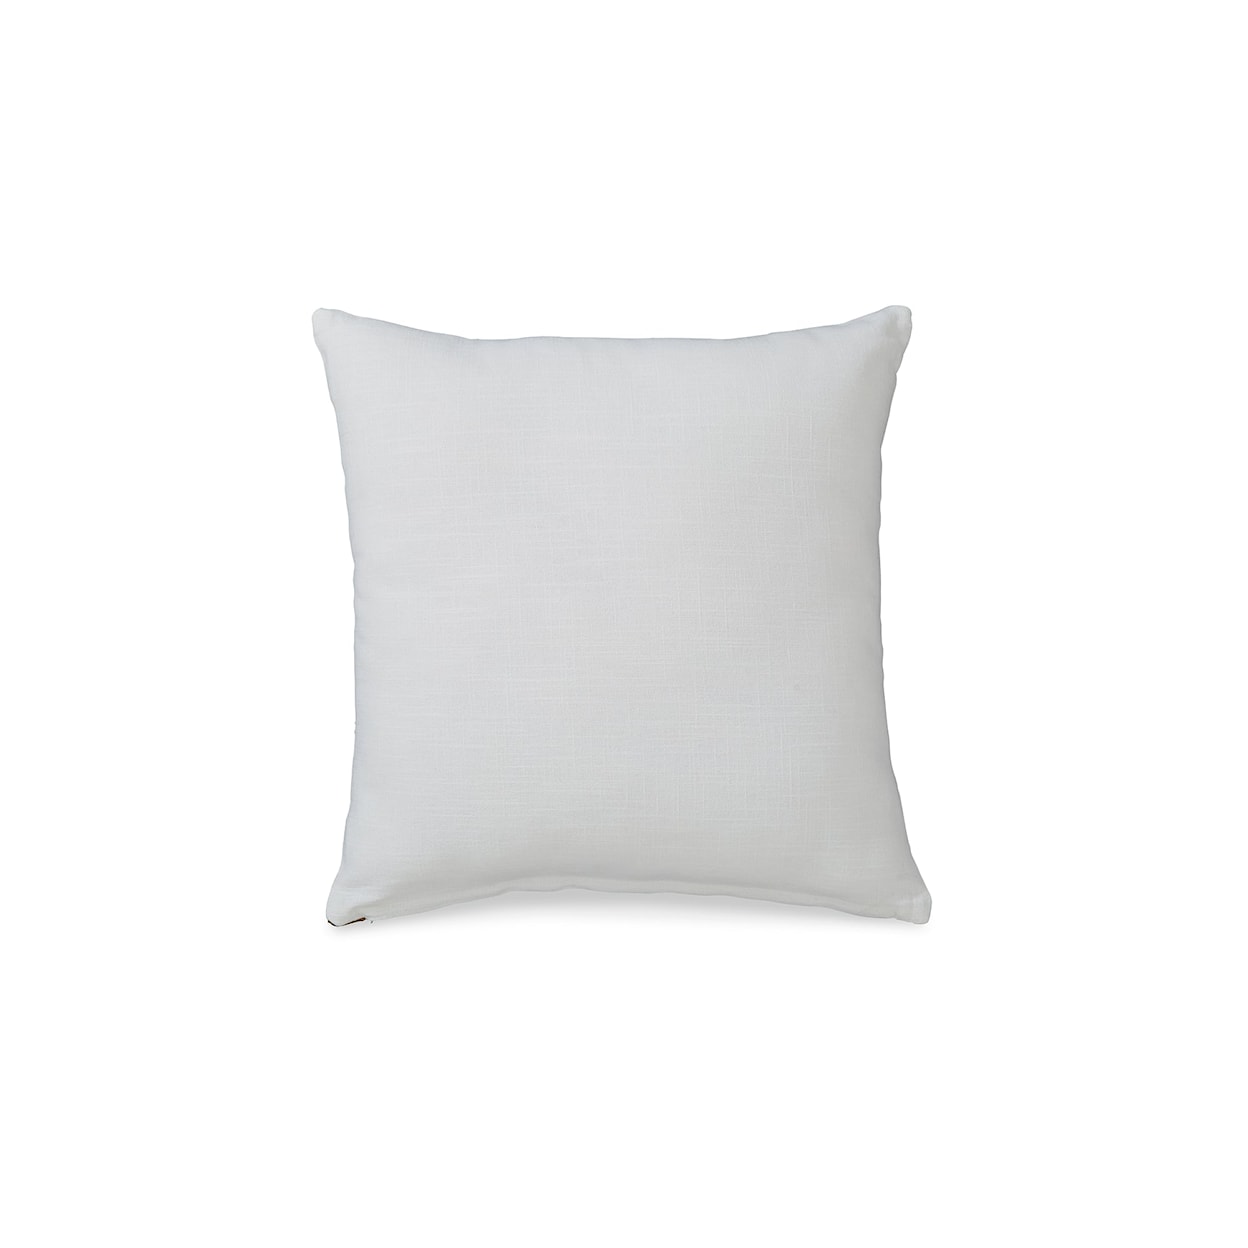 Signature Longsum Pillow (Set of 4)